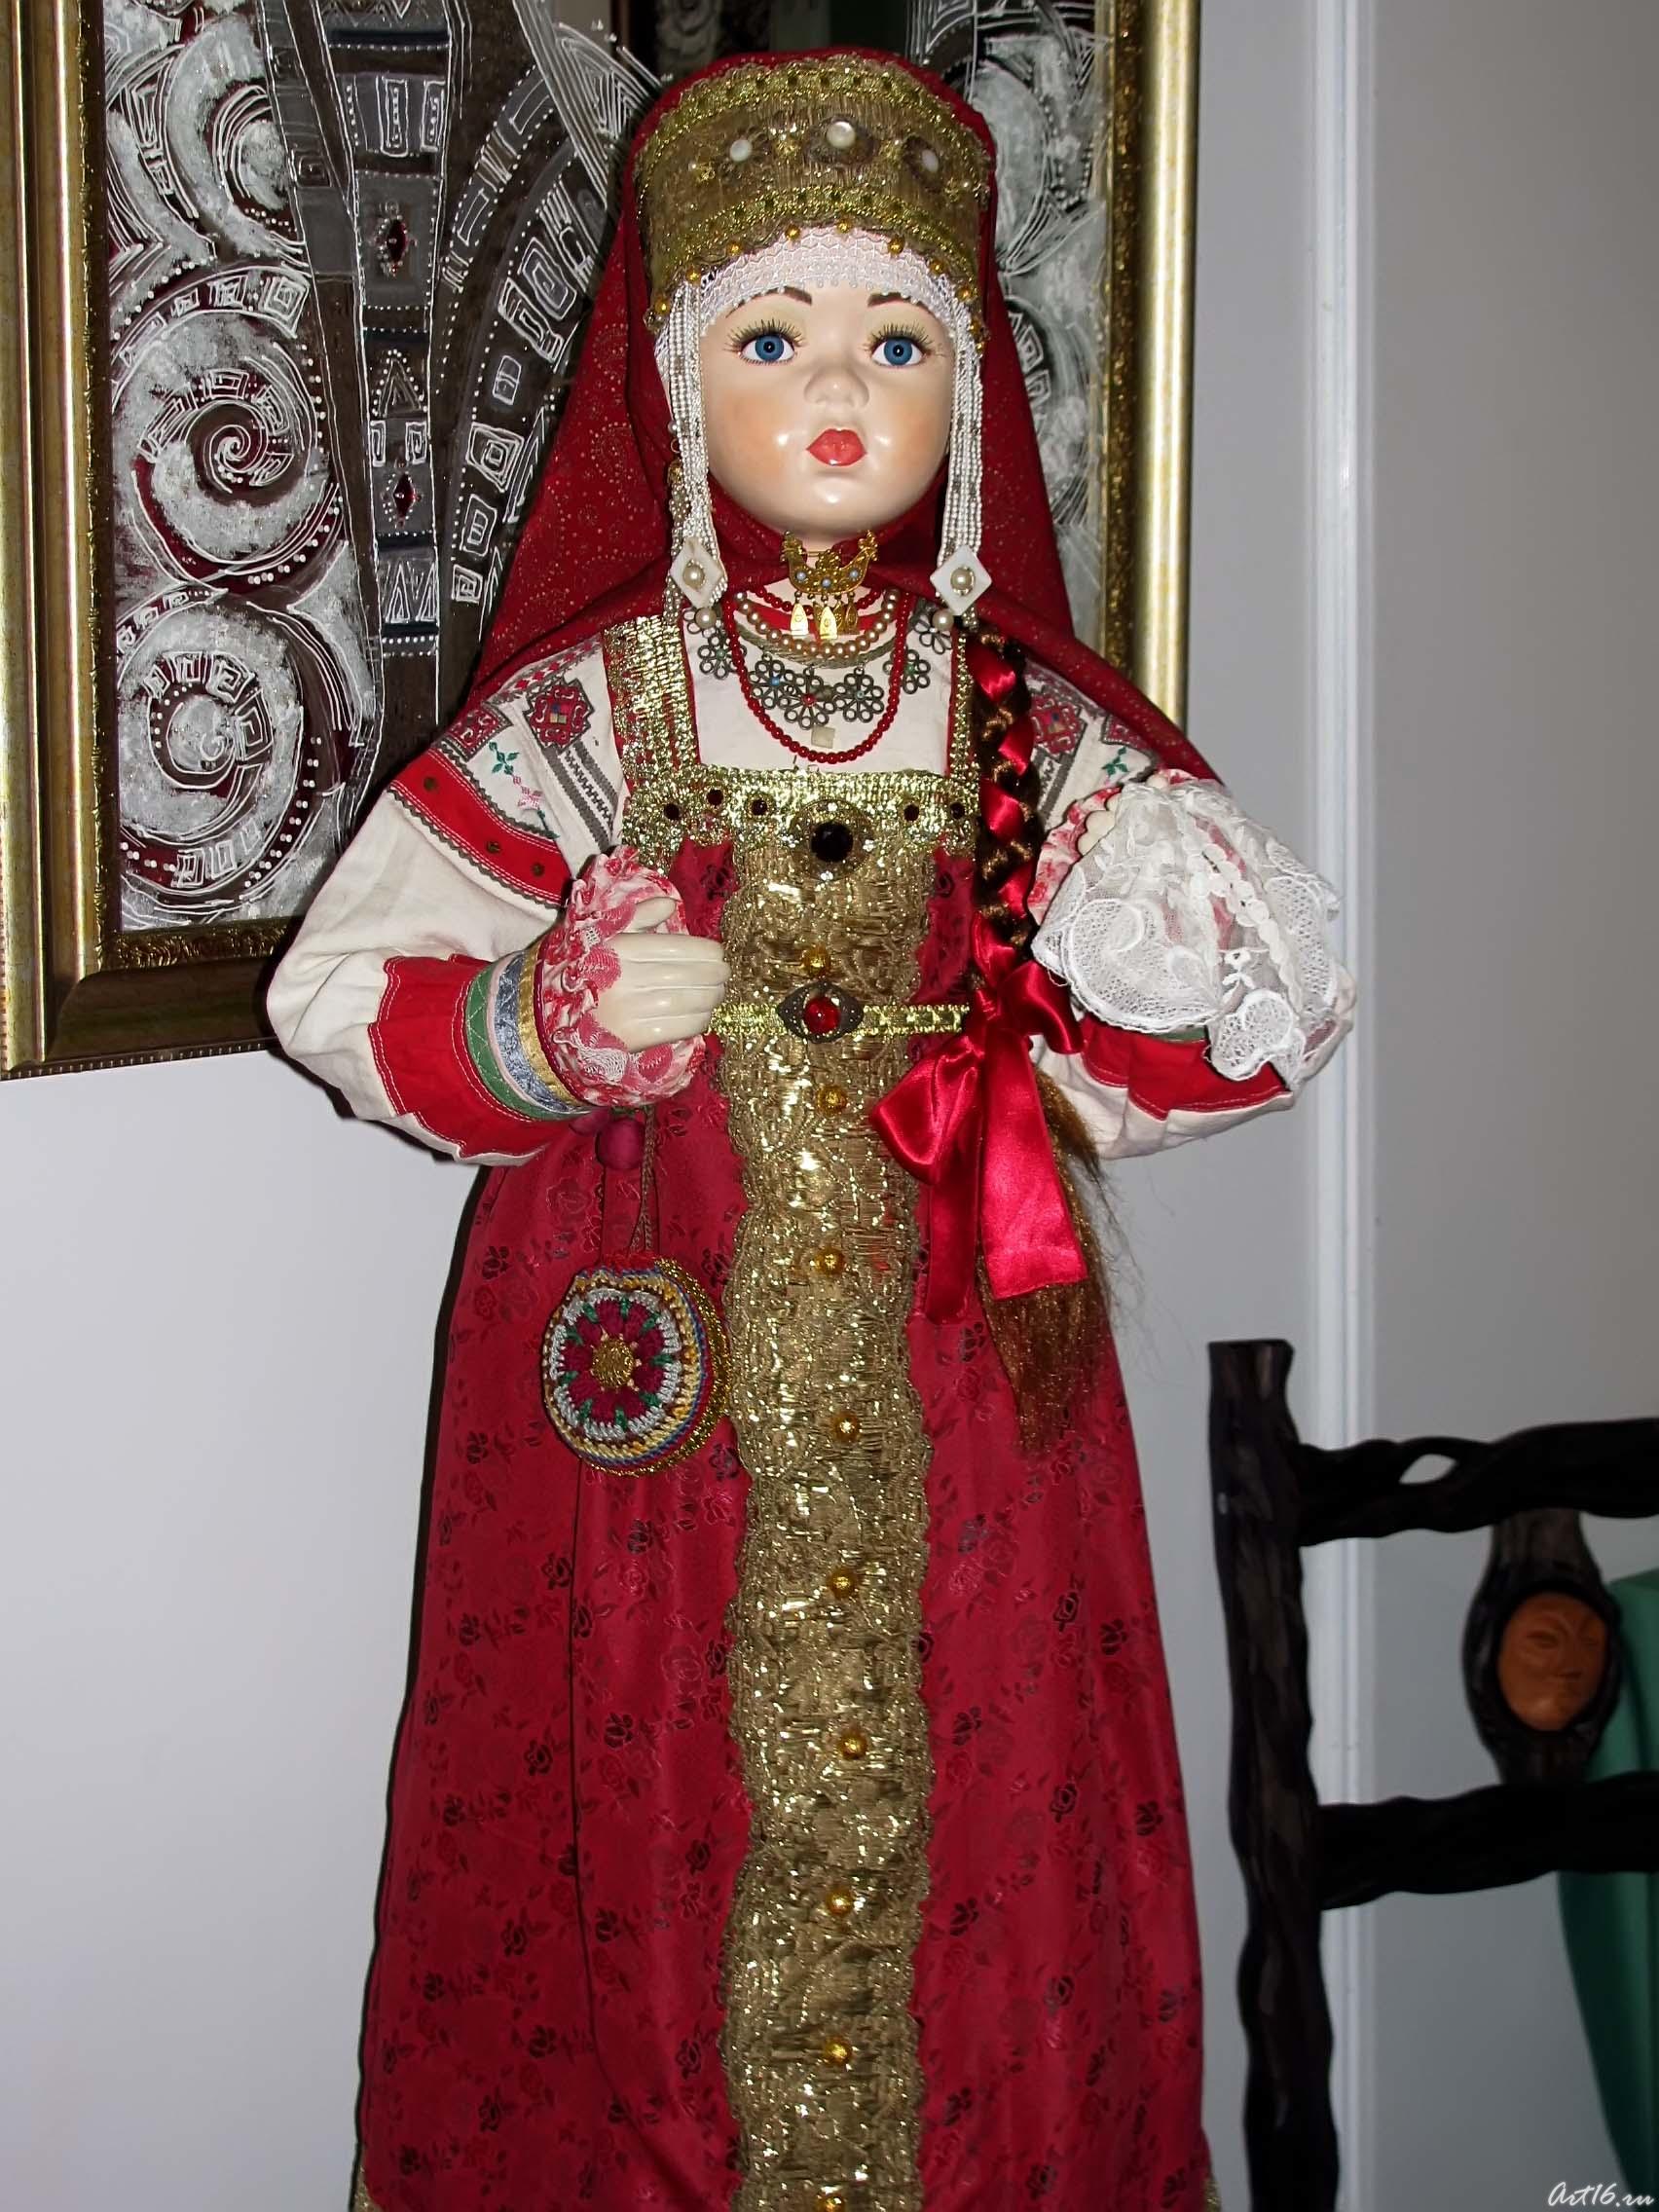 Кукла в русском костюме, г. Казань. 2010::Арт-галерея. Казань — 2010